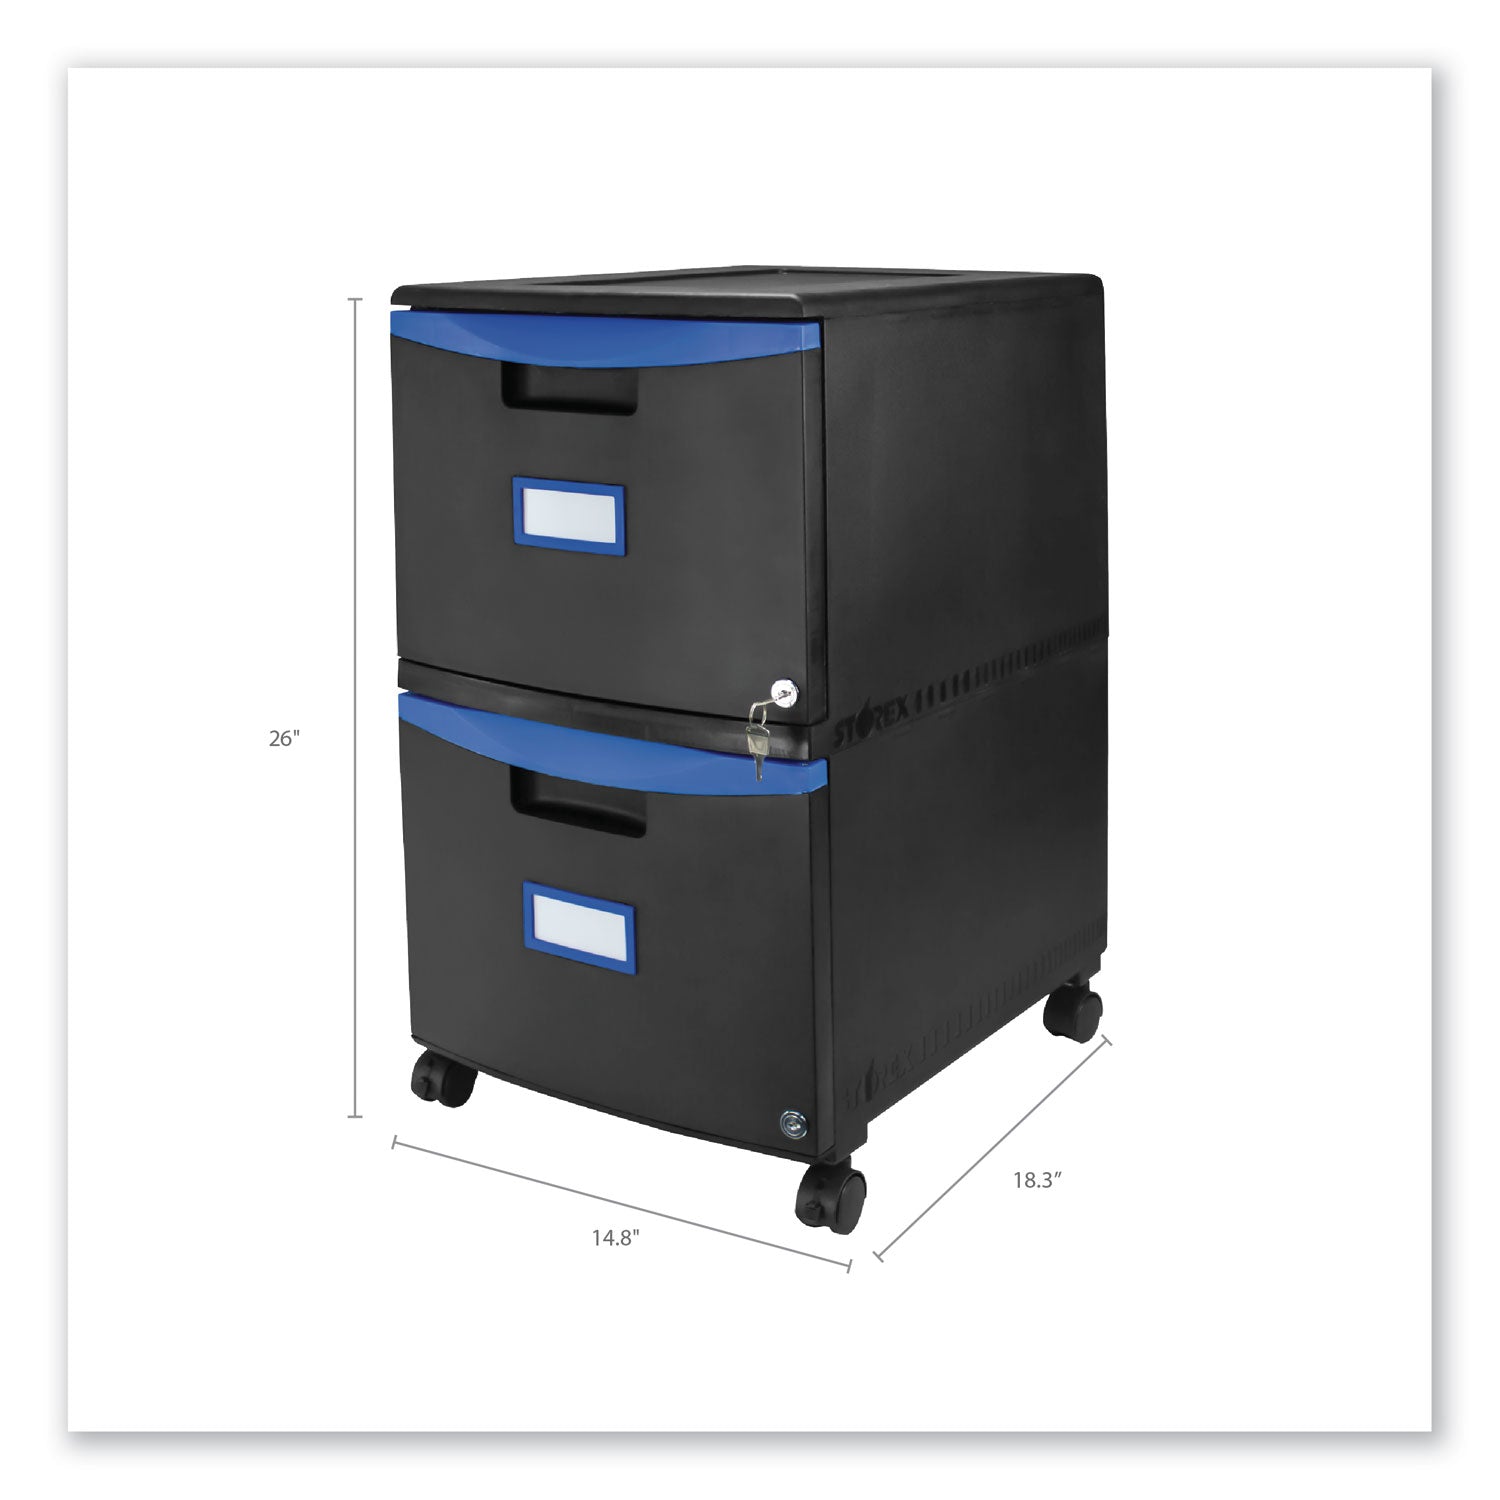 two-drawer-mobile-filing-cabinet-2-legal-letter-size-file-drawers-black-blue-1475-x-1825-x-26_stx61314u01c - 7